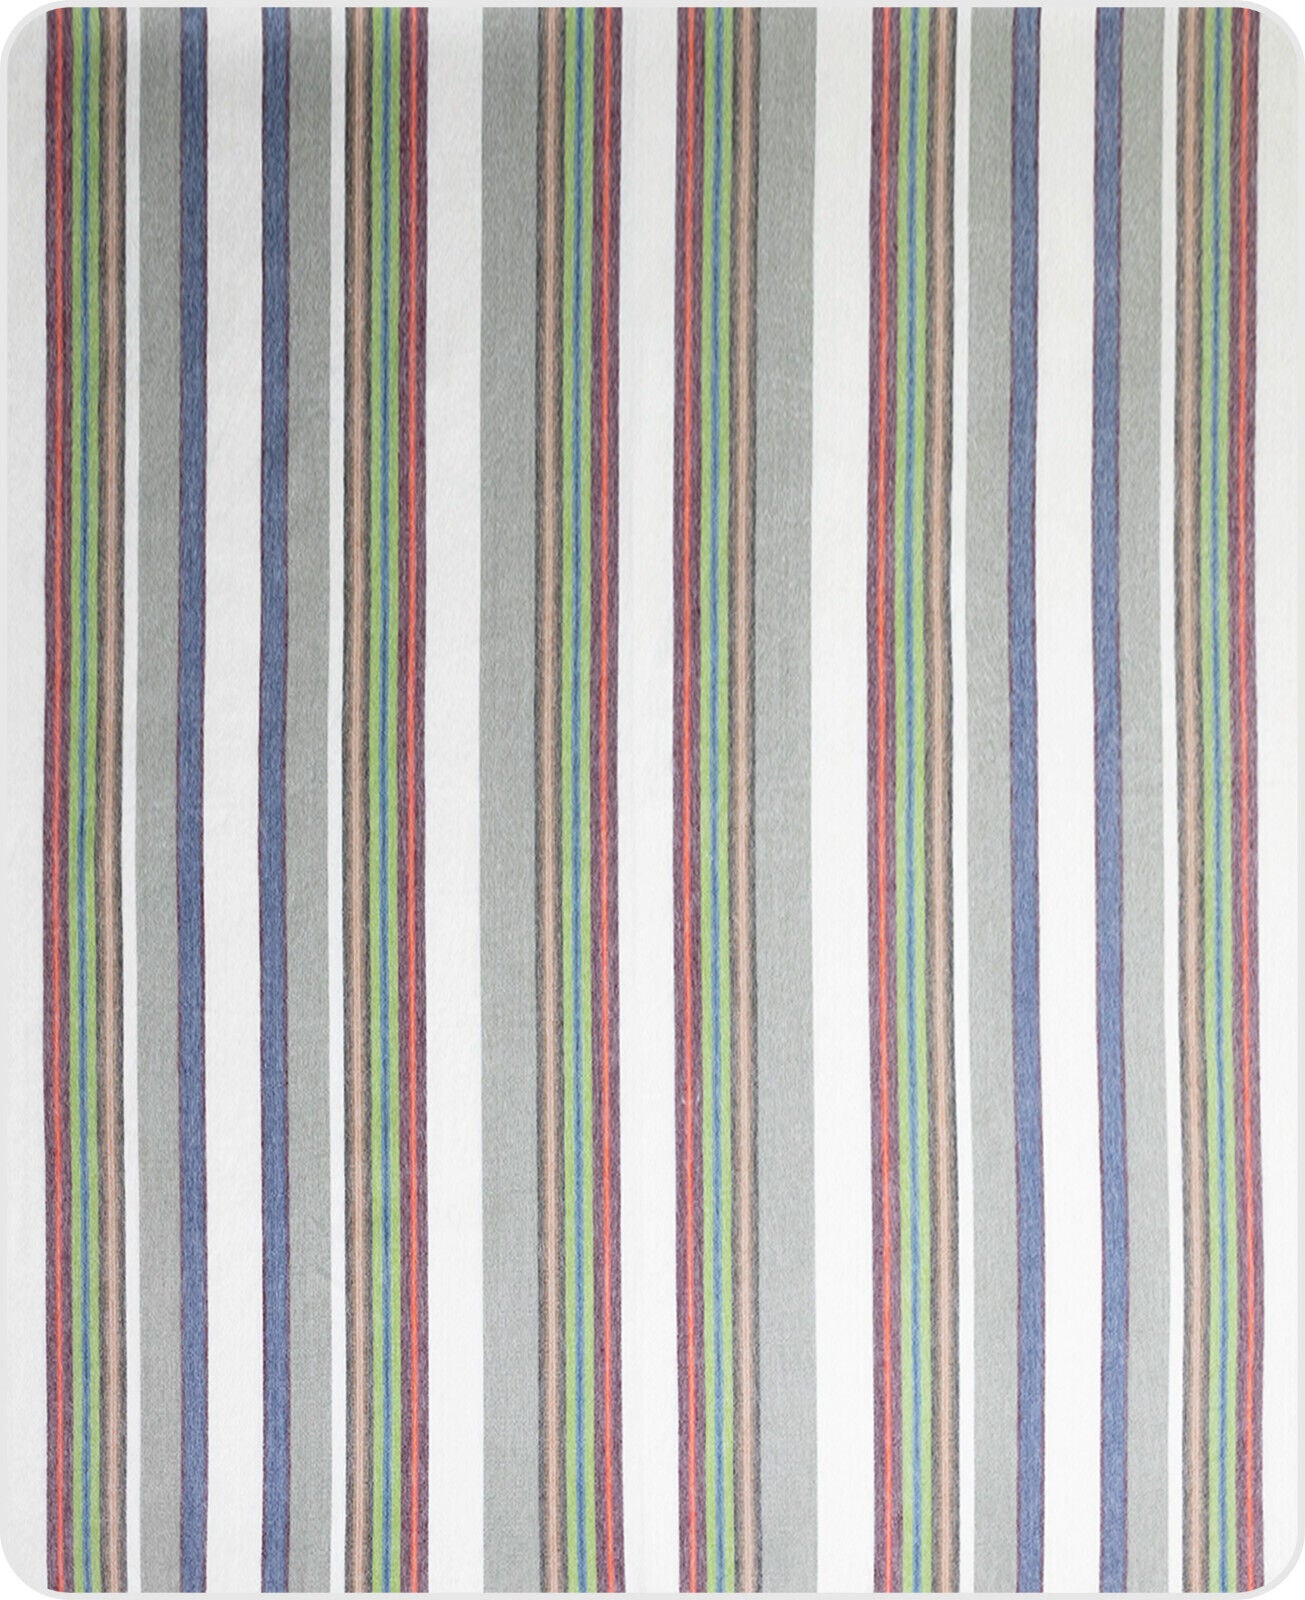 Zuro - Baby Alpaca Wool Throw Blanket / Sofa Cover - Queen 95 x 67 in - pastel colors